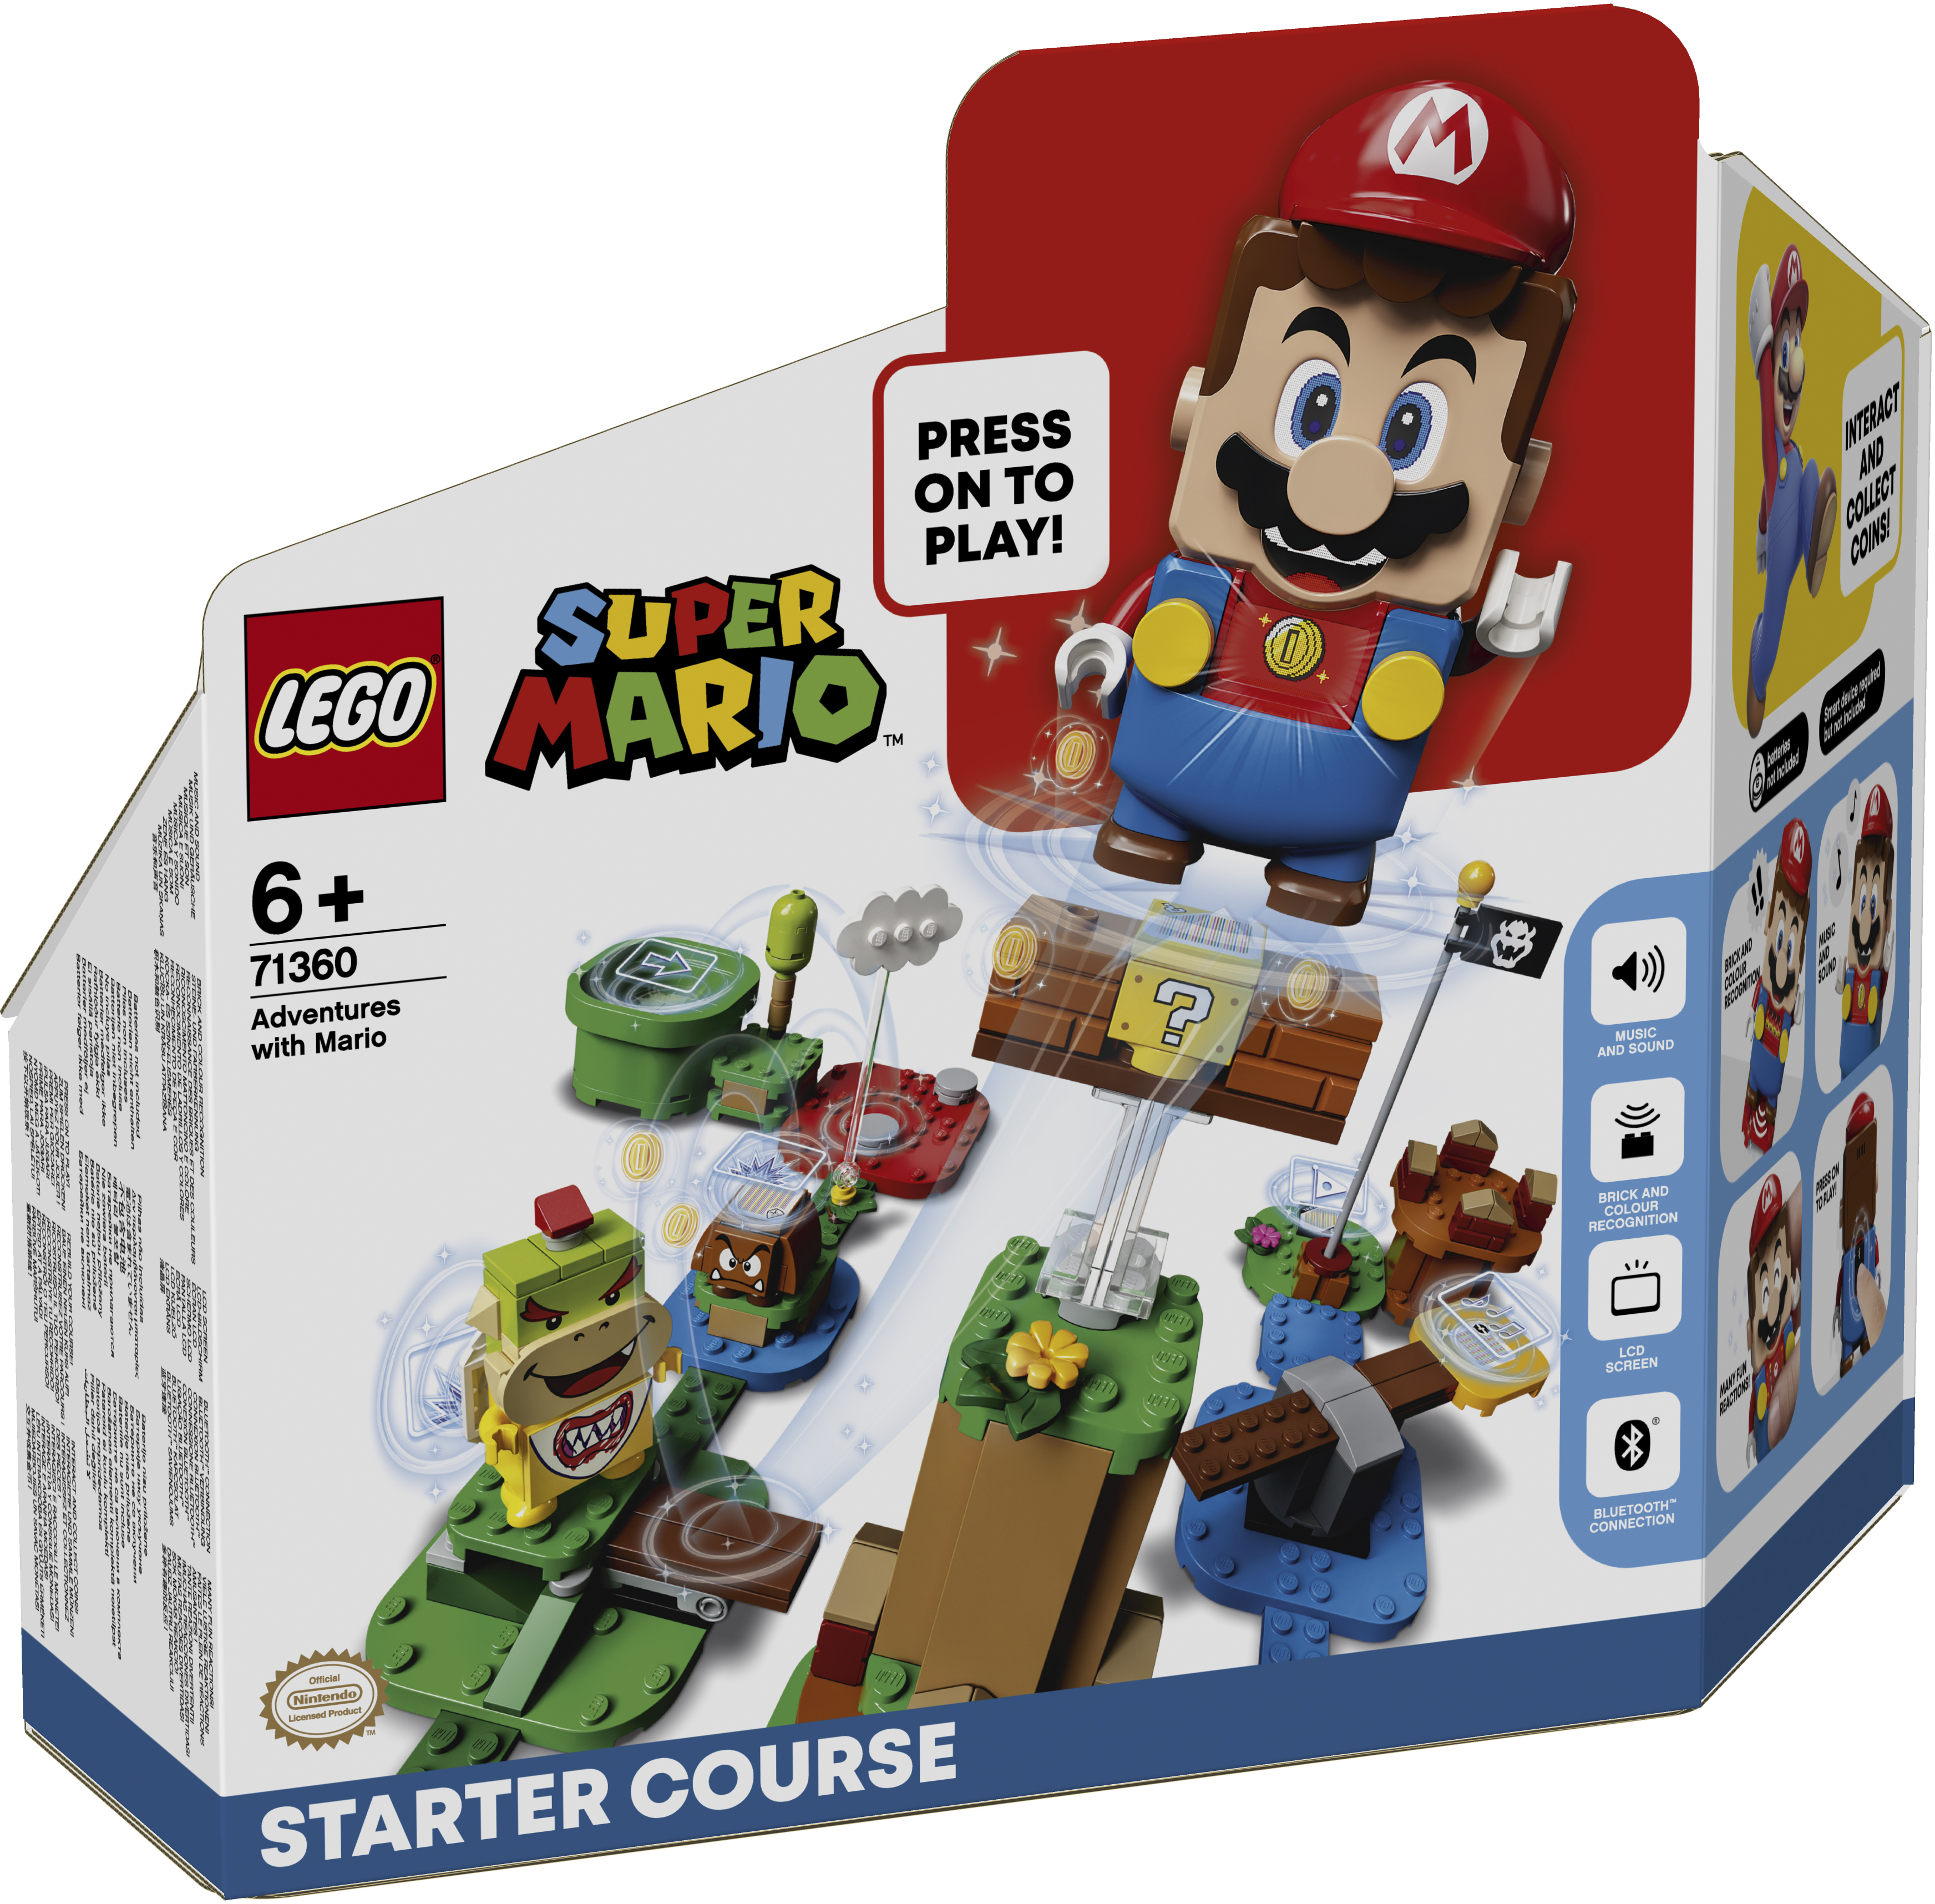  Super Mario Eventyr Med Mario - Startbane - 71360